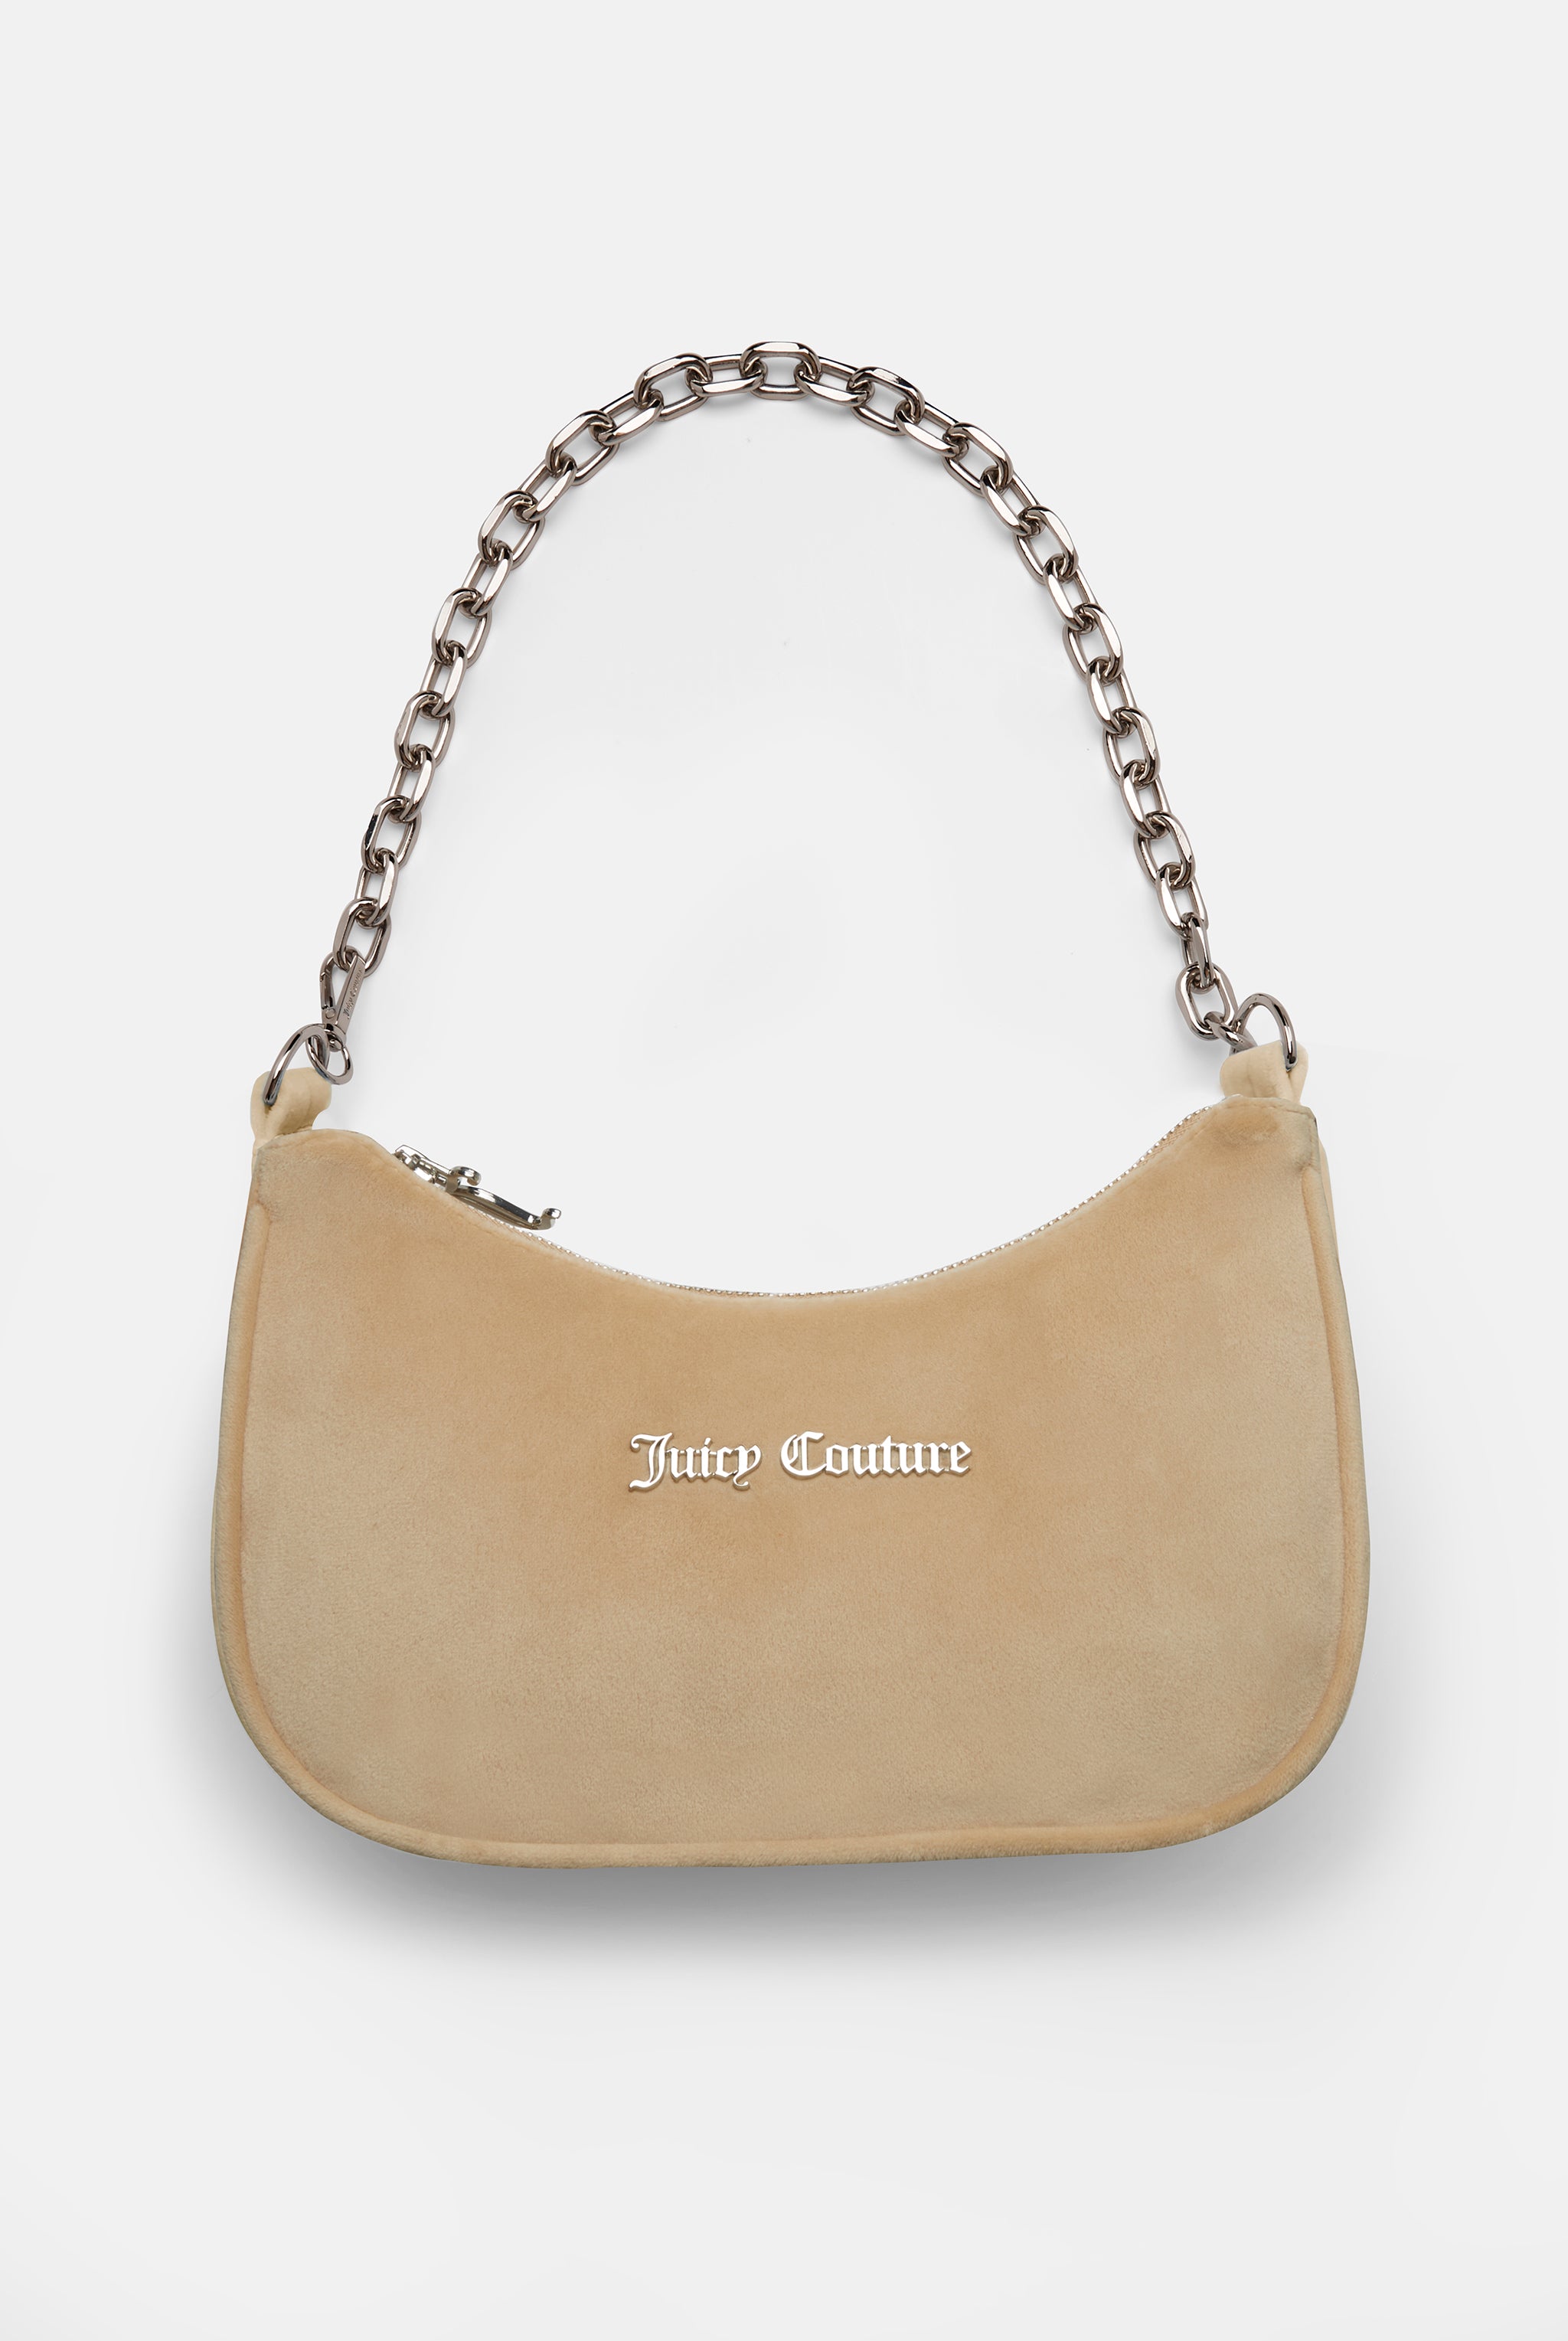 Juicy Couture Small Leather Handbag YHRU1125 | eBay